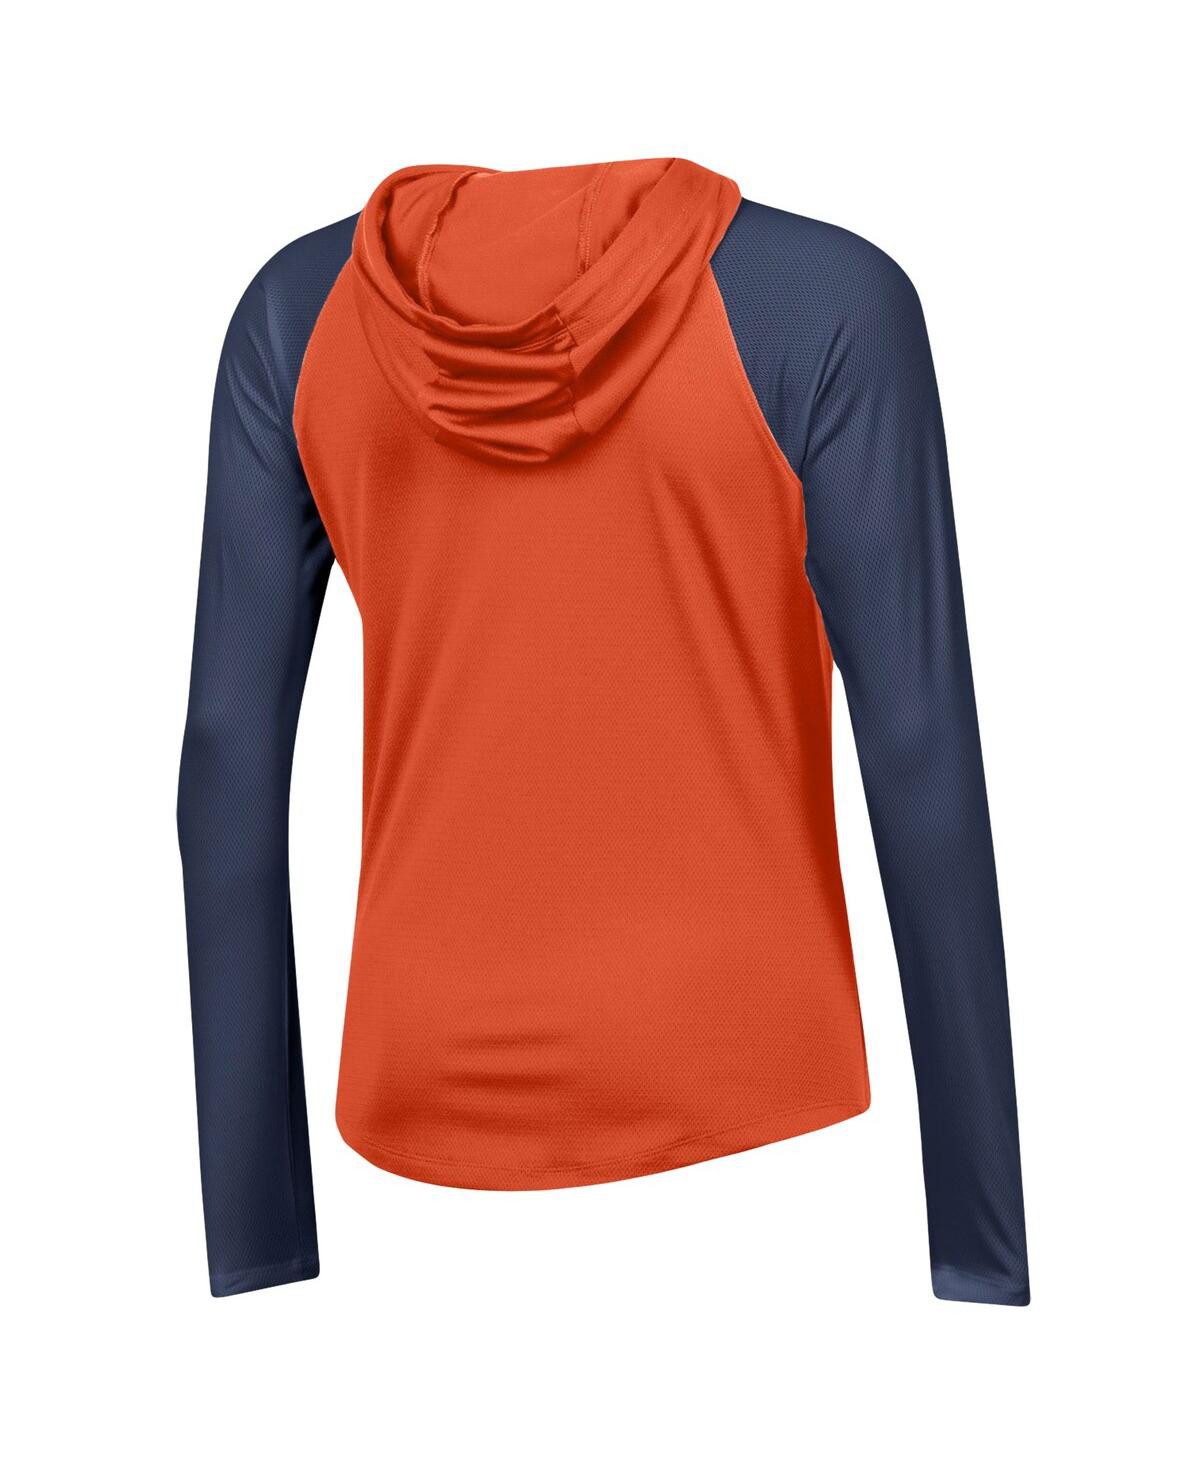 Shop Under Armour Women's  Orange Auburn Tigers Gameday Mesh Performance Raglan Hooded Long Sleeve T-shirt